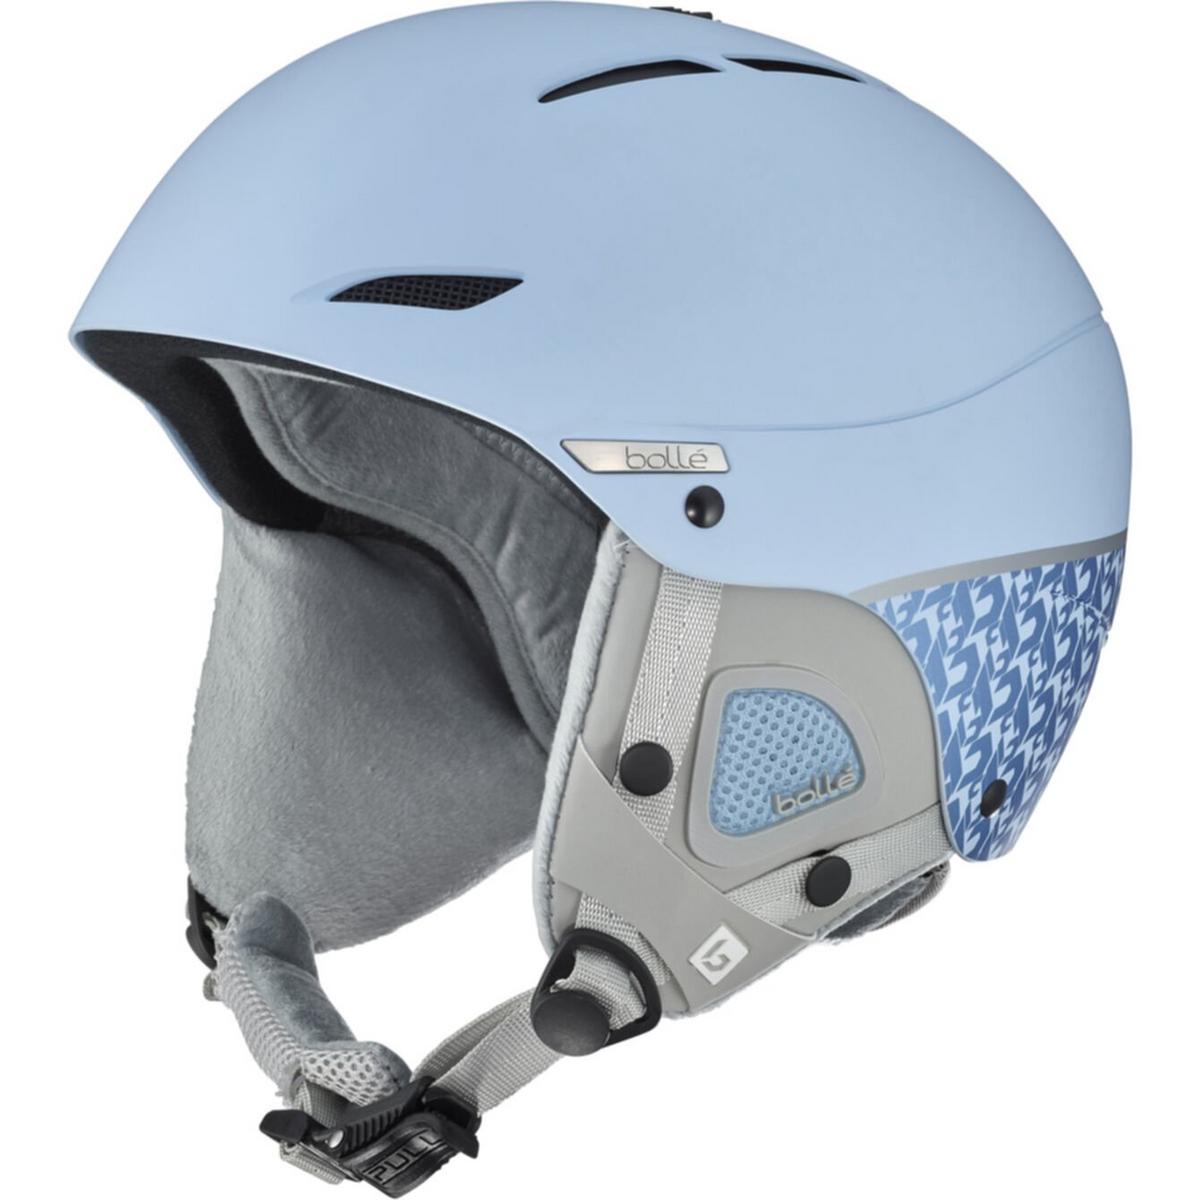 Bolle Women's Juliet Helmet - Powder Blue Matte